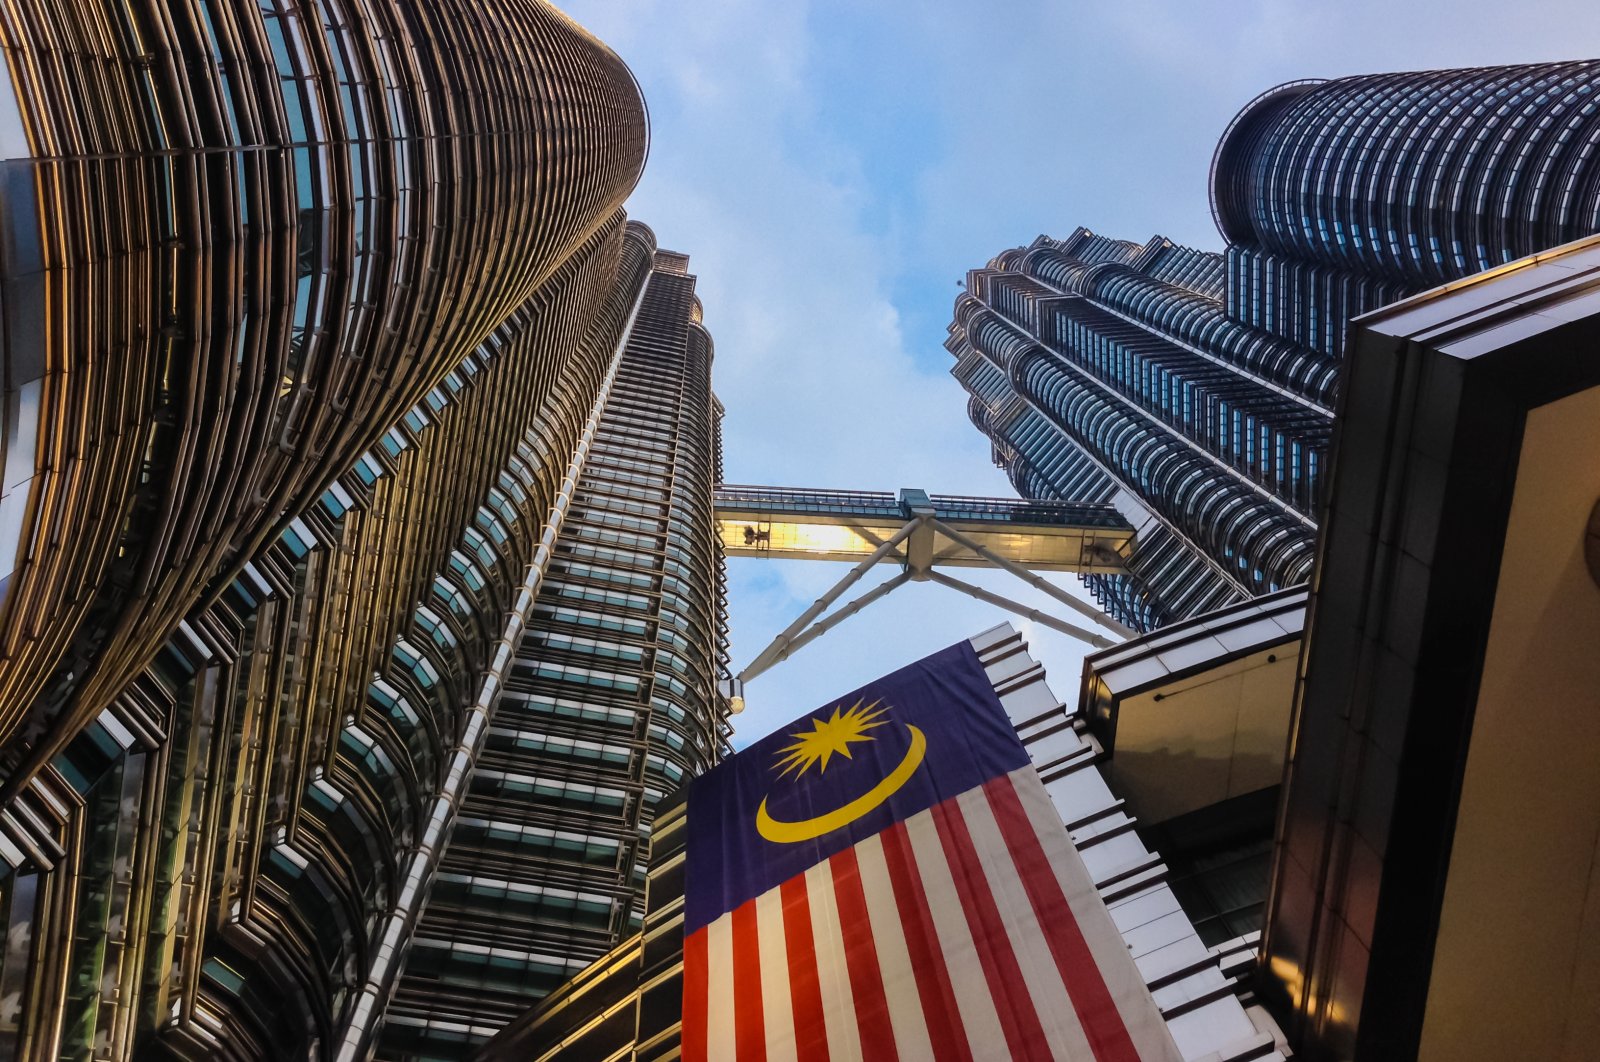 The Malaysian flag hangs from the Petronas Towers in Kuala Lumpur, Malaysia, Aug. 22, 2014. (Shutterstock Photo)